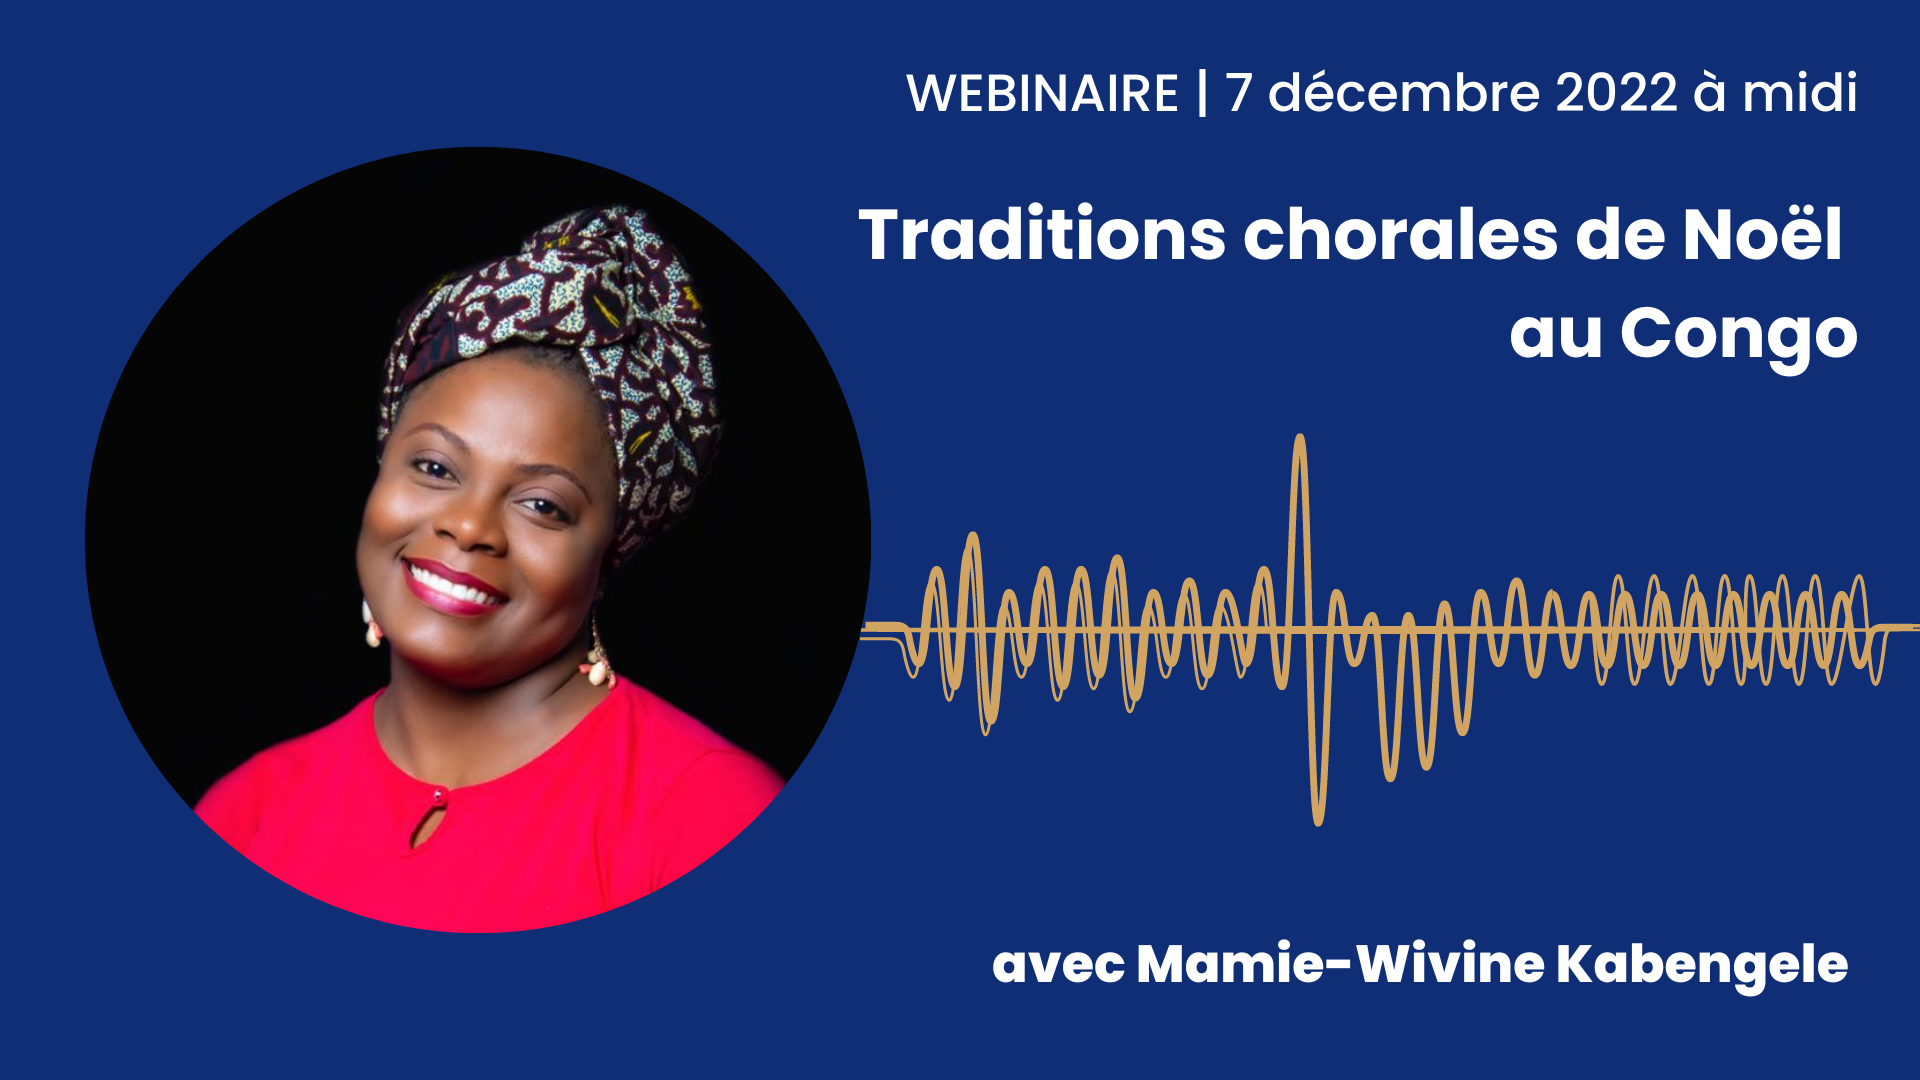 WEBINAIRE | Traditions chorales de Noël au Congo